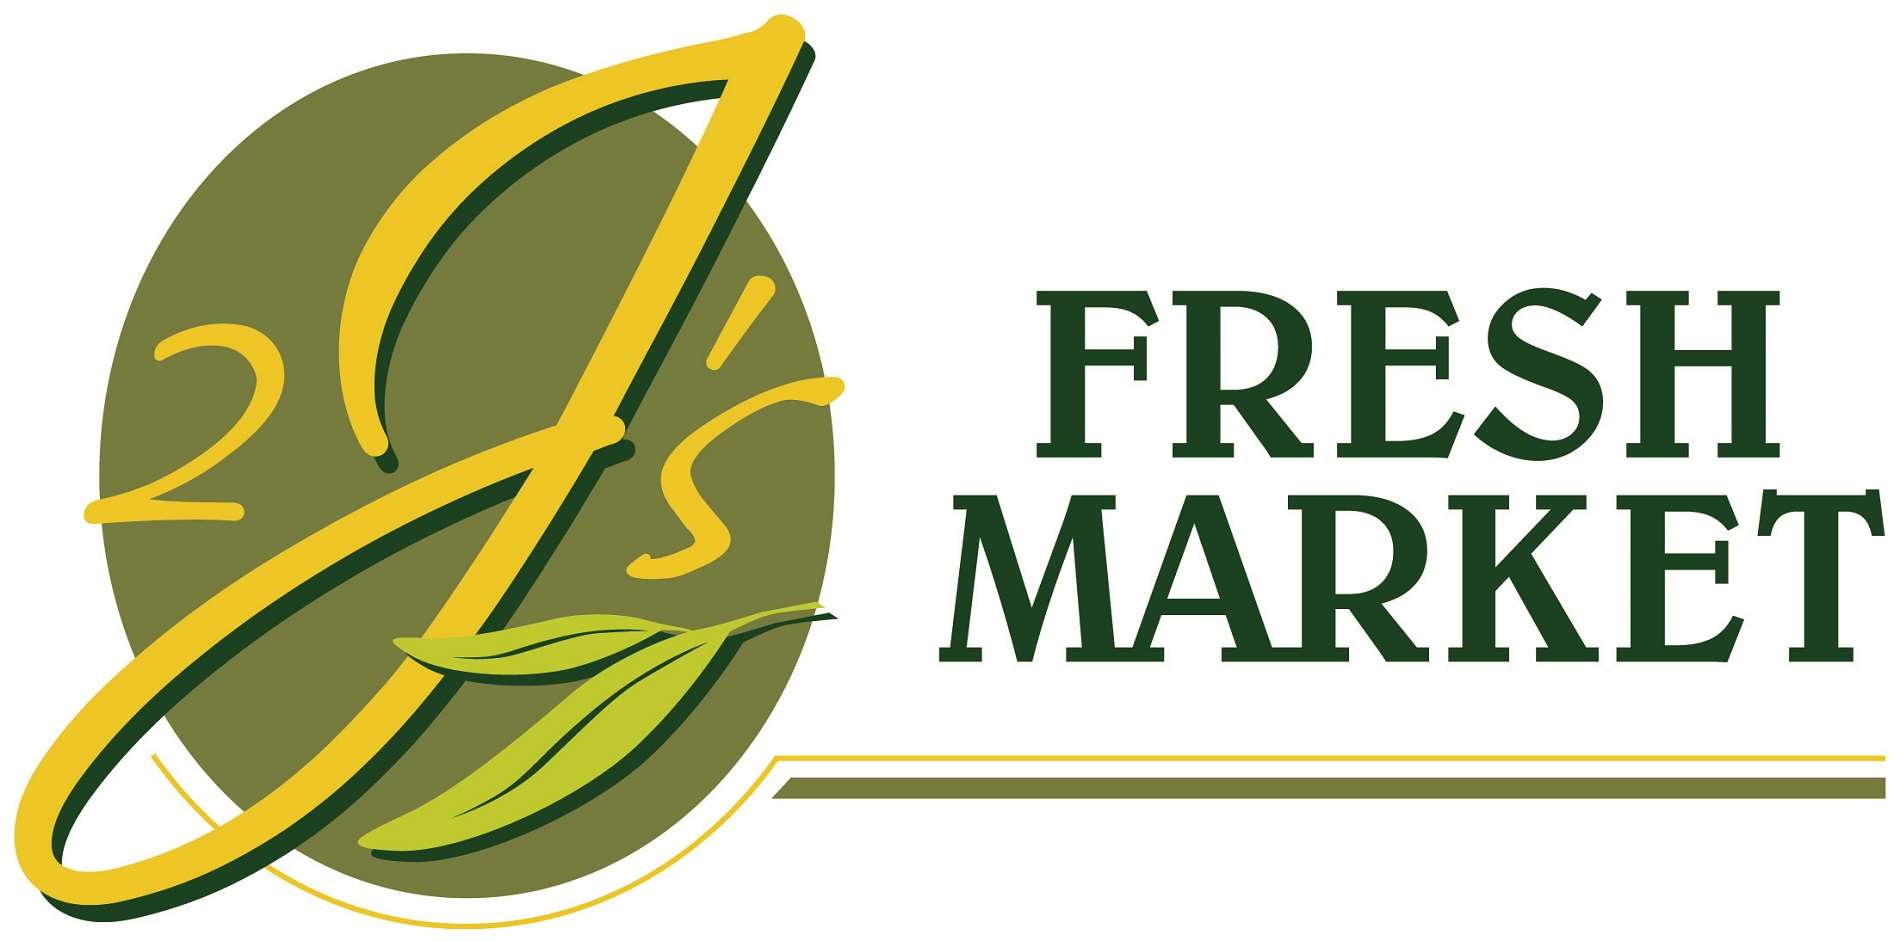 2 J's Fresh Market Logo